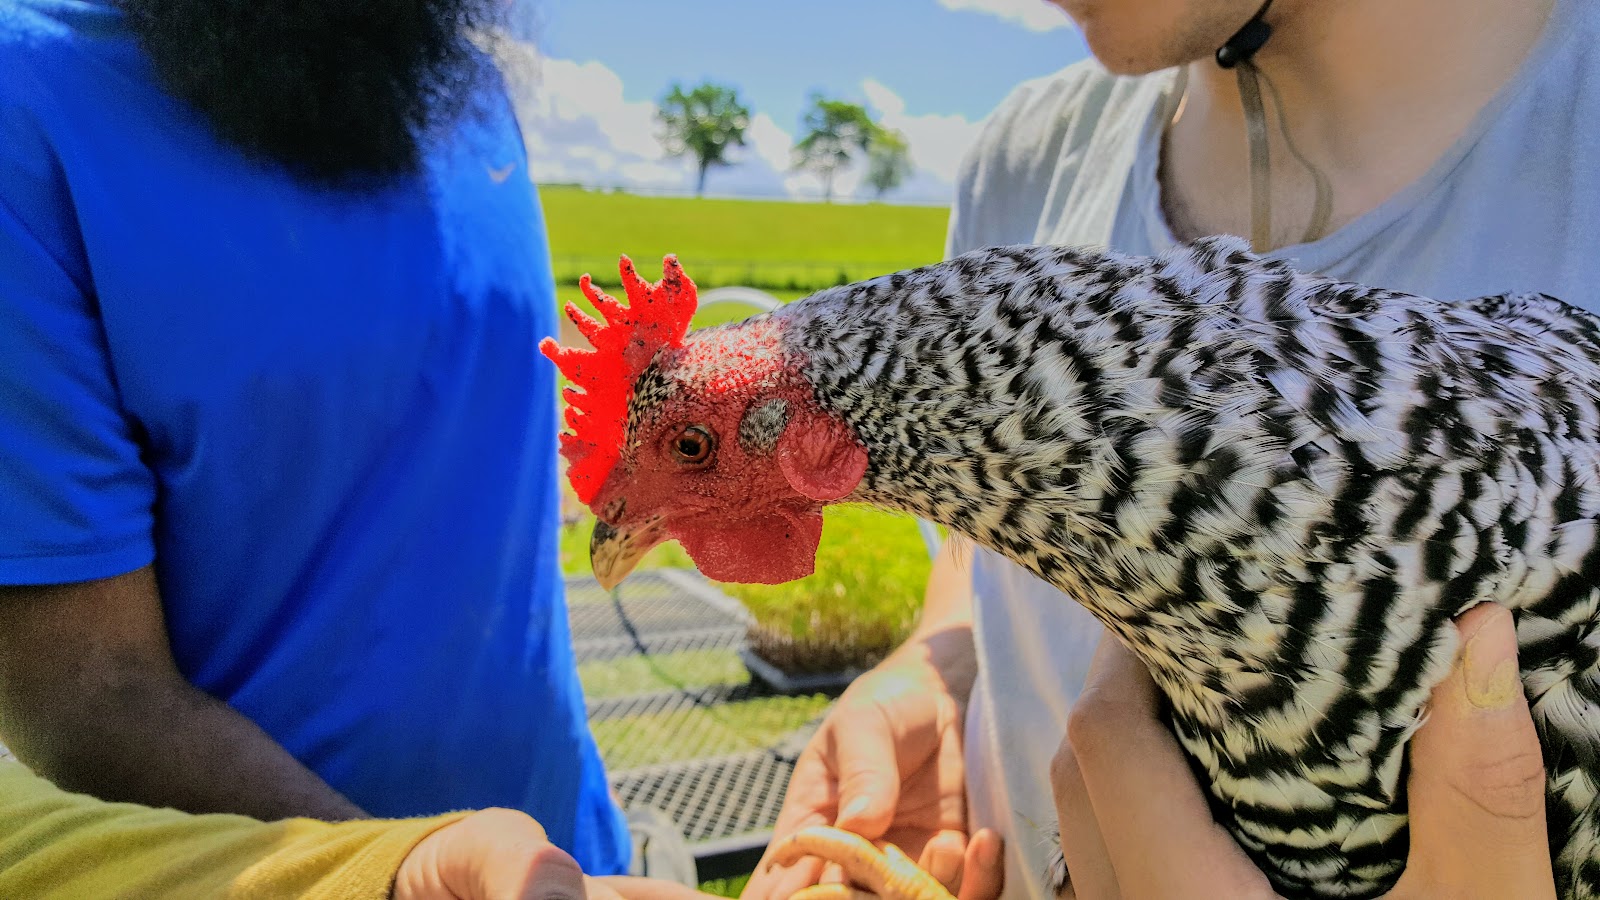 Liberty Farms chickens